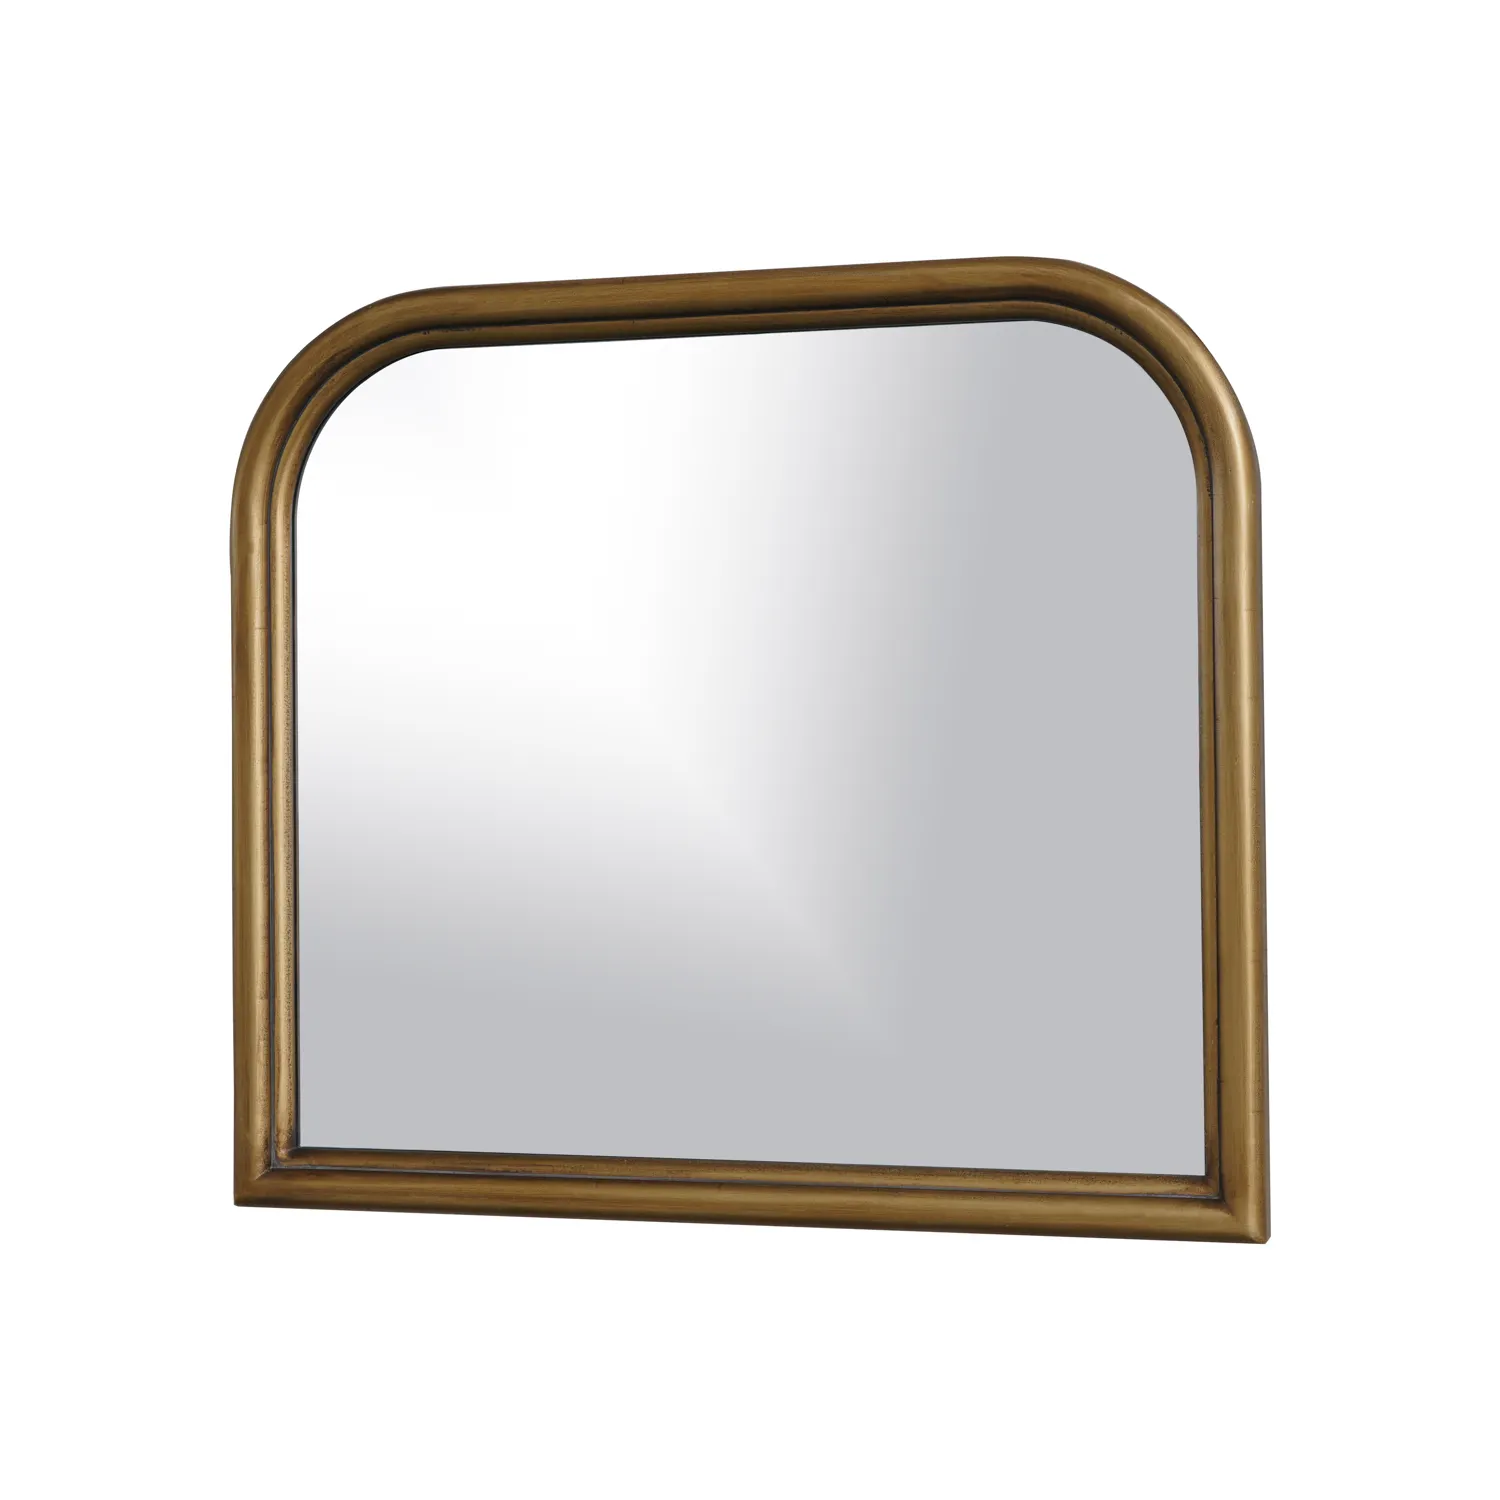 YUNFEI Wood golden edge mirror custom mirror gold